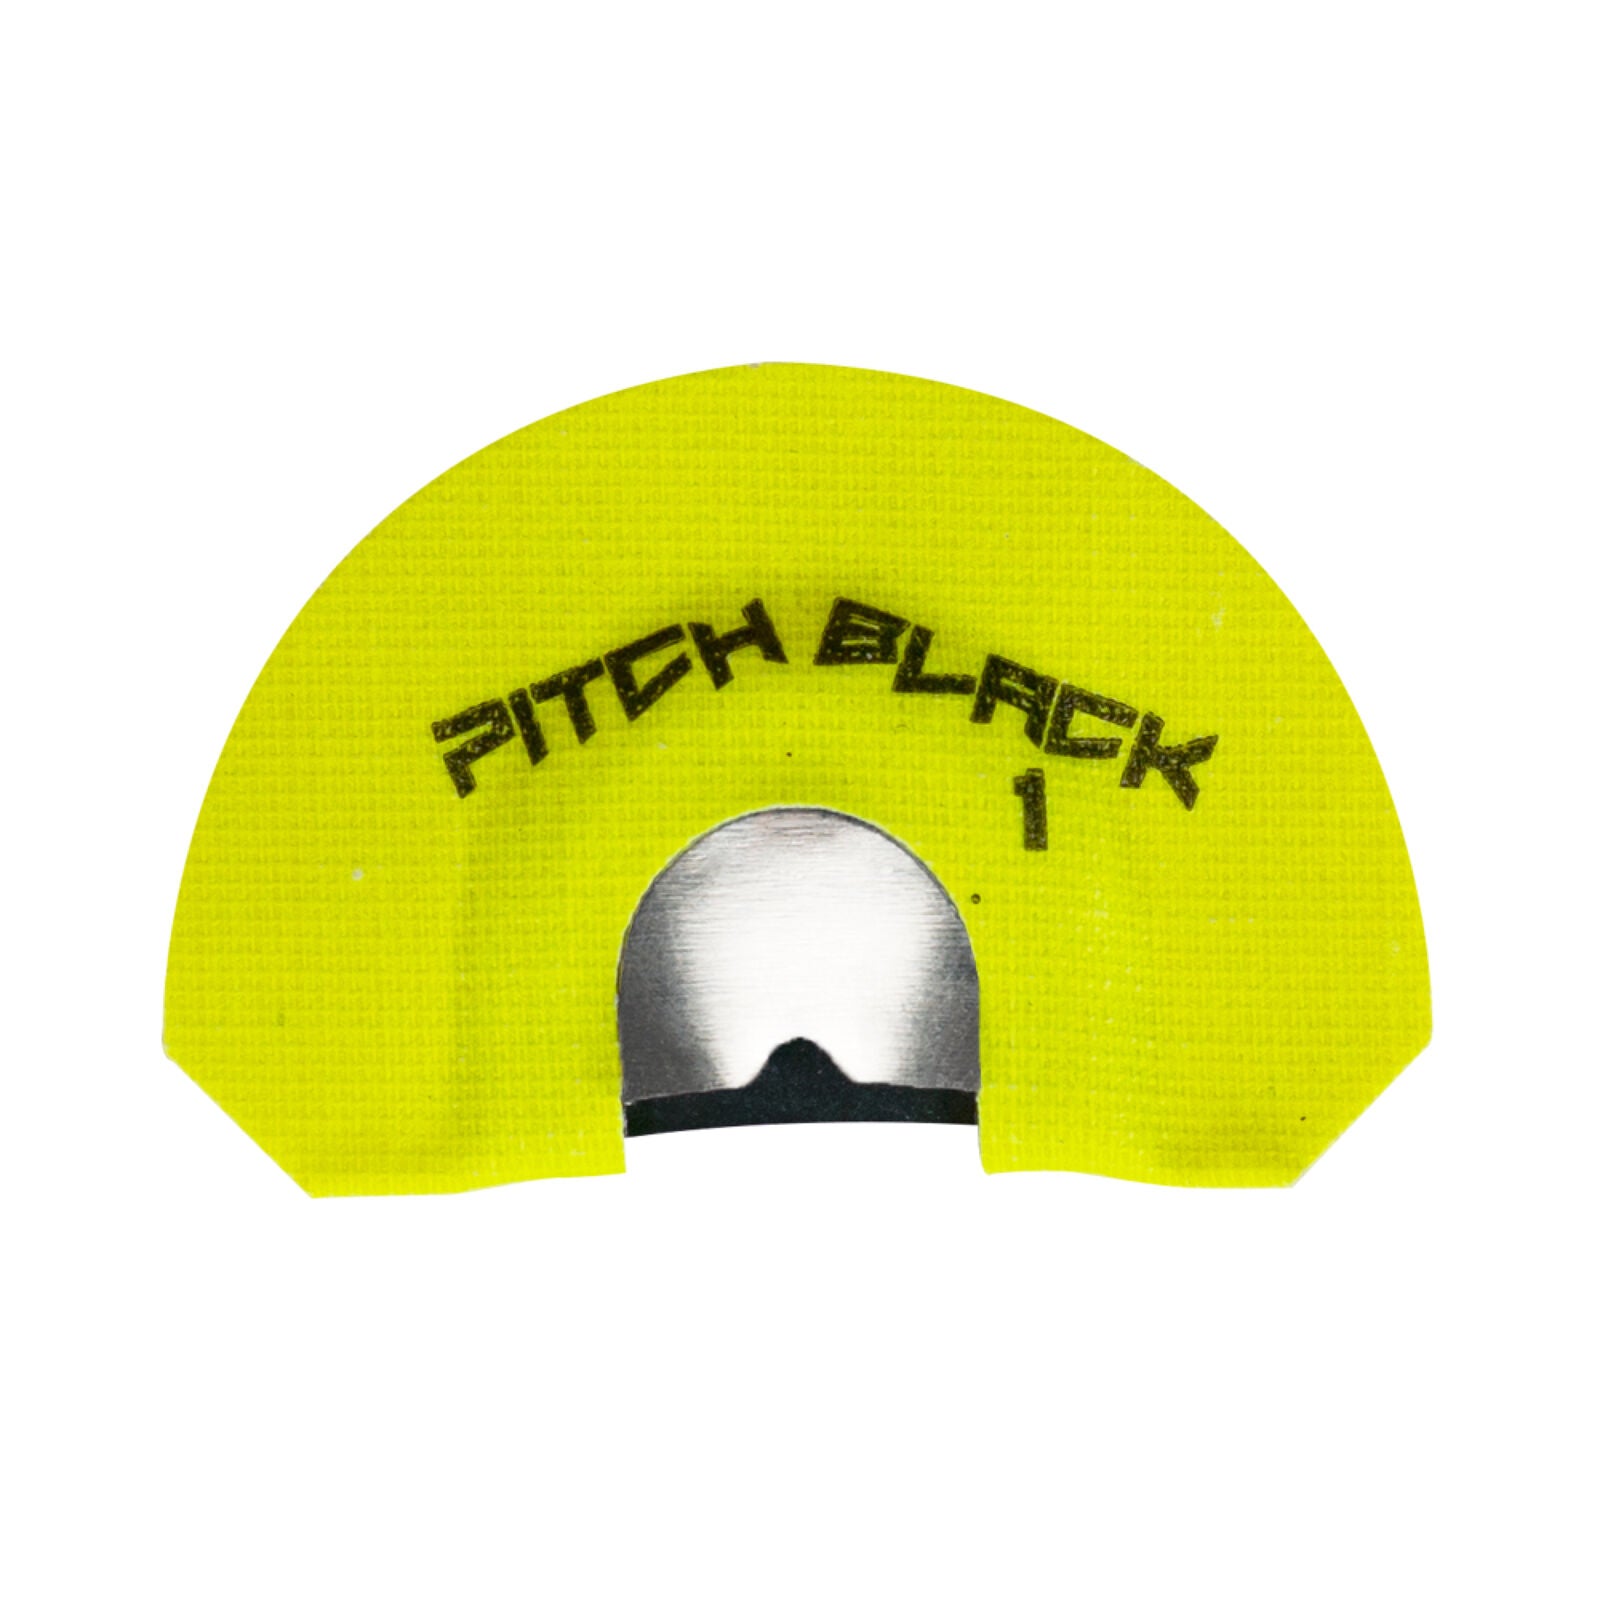 PITCH BLACK 1 phelps game calls